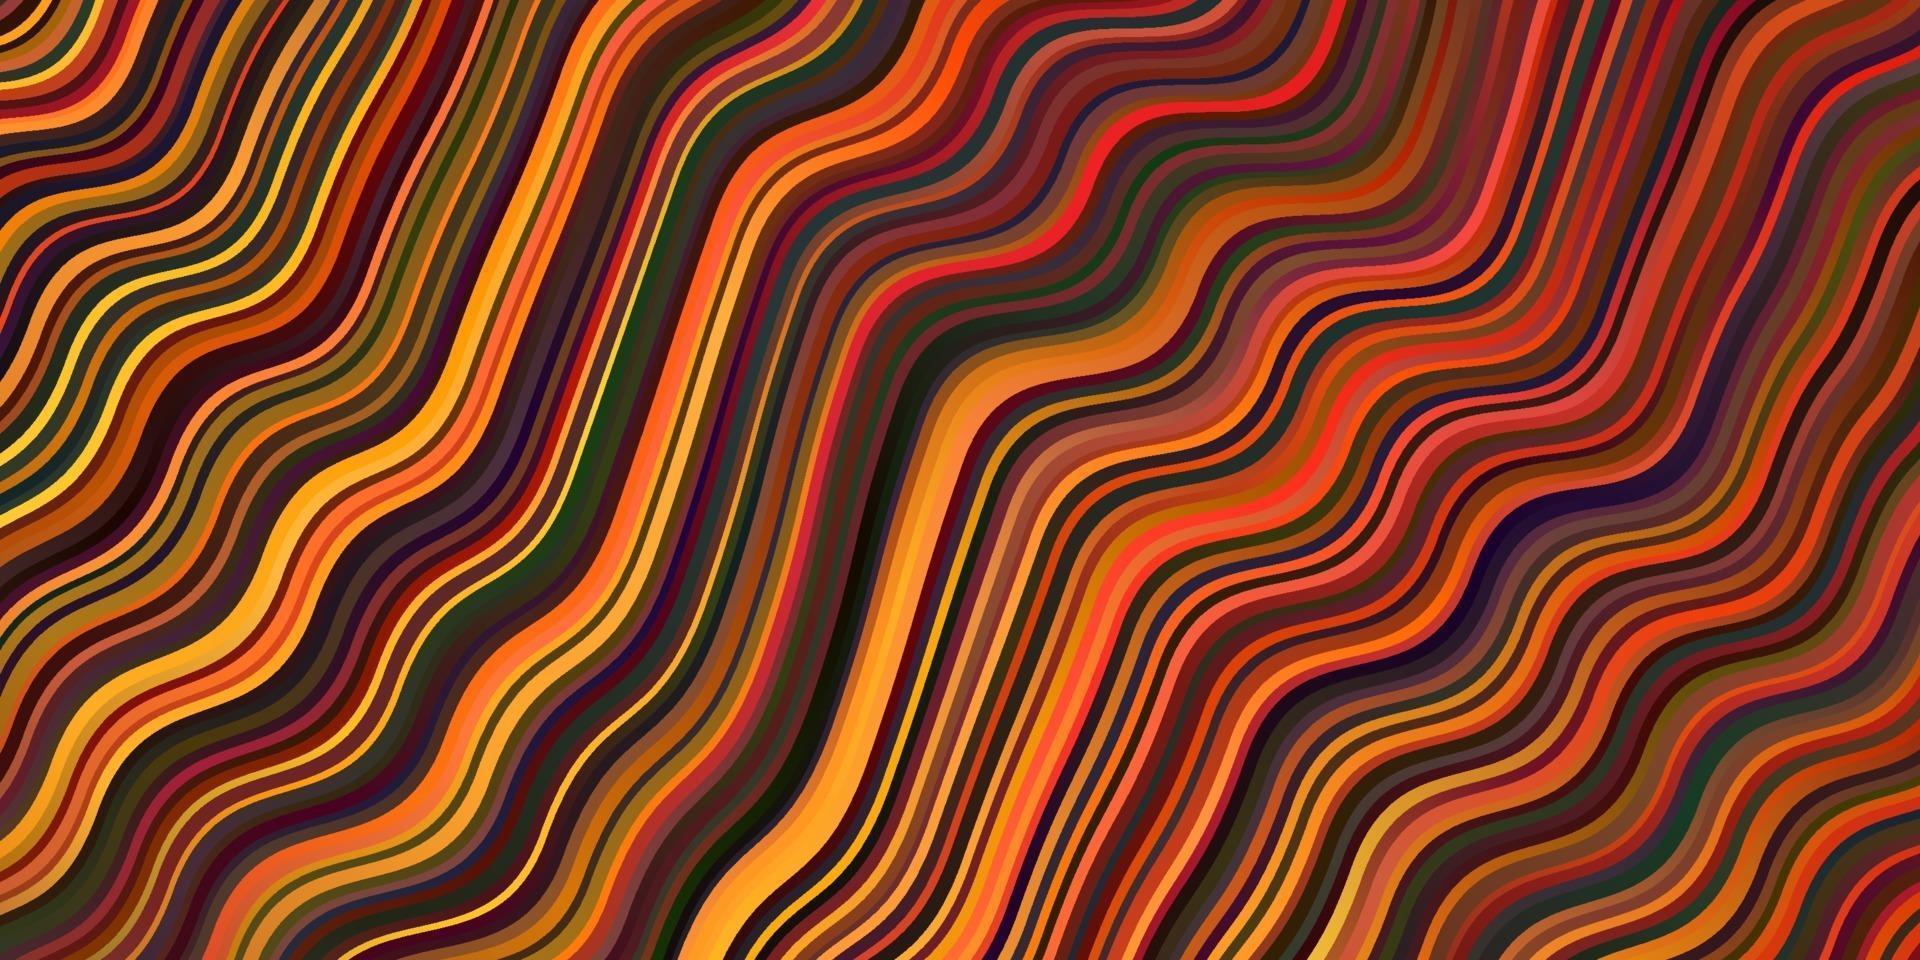 textura vector laranja escuro com linhas curvas.